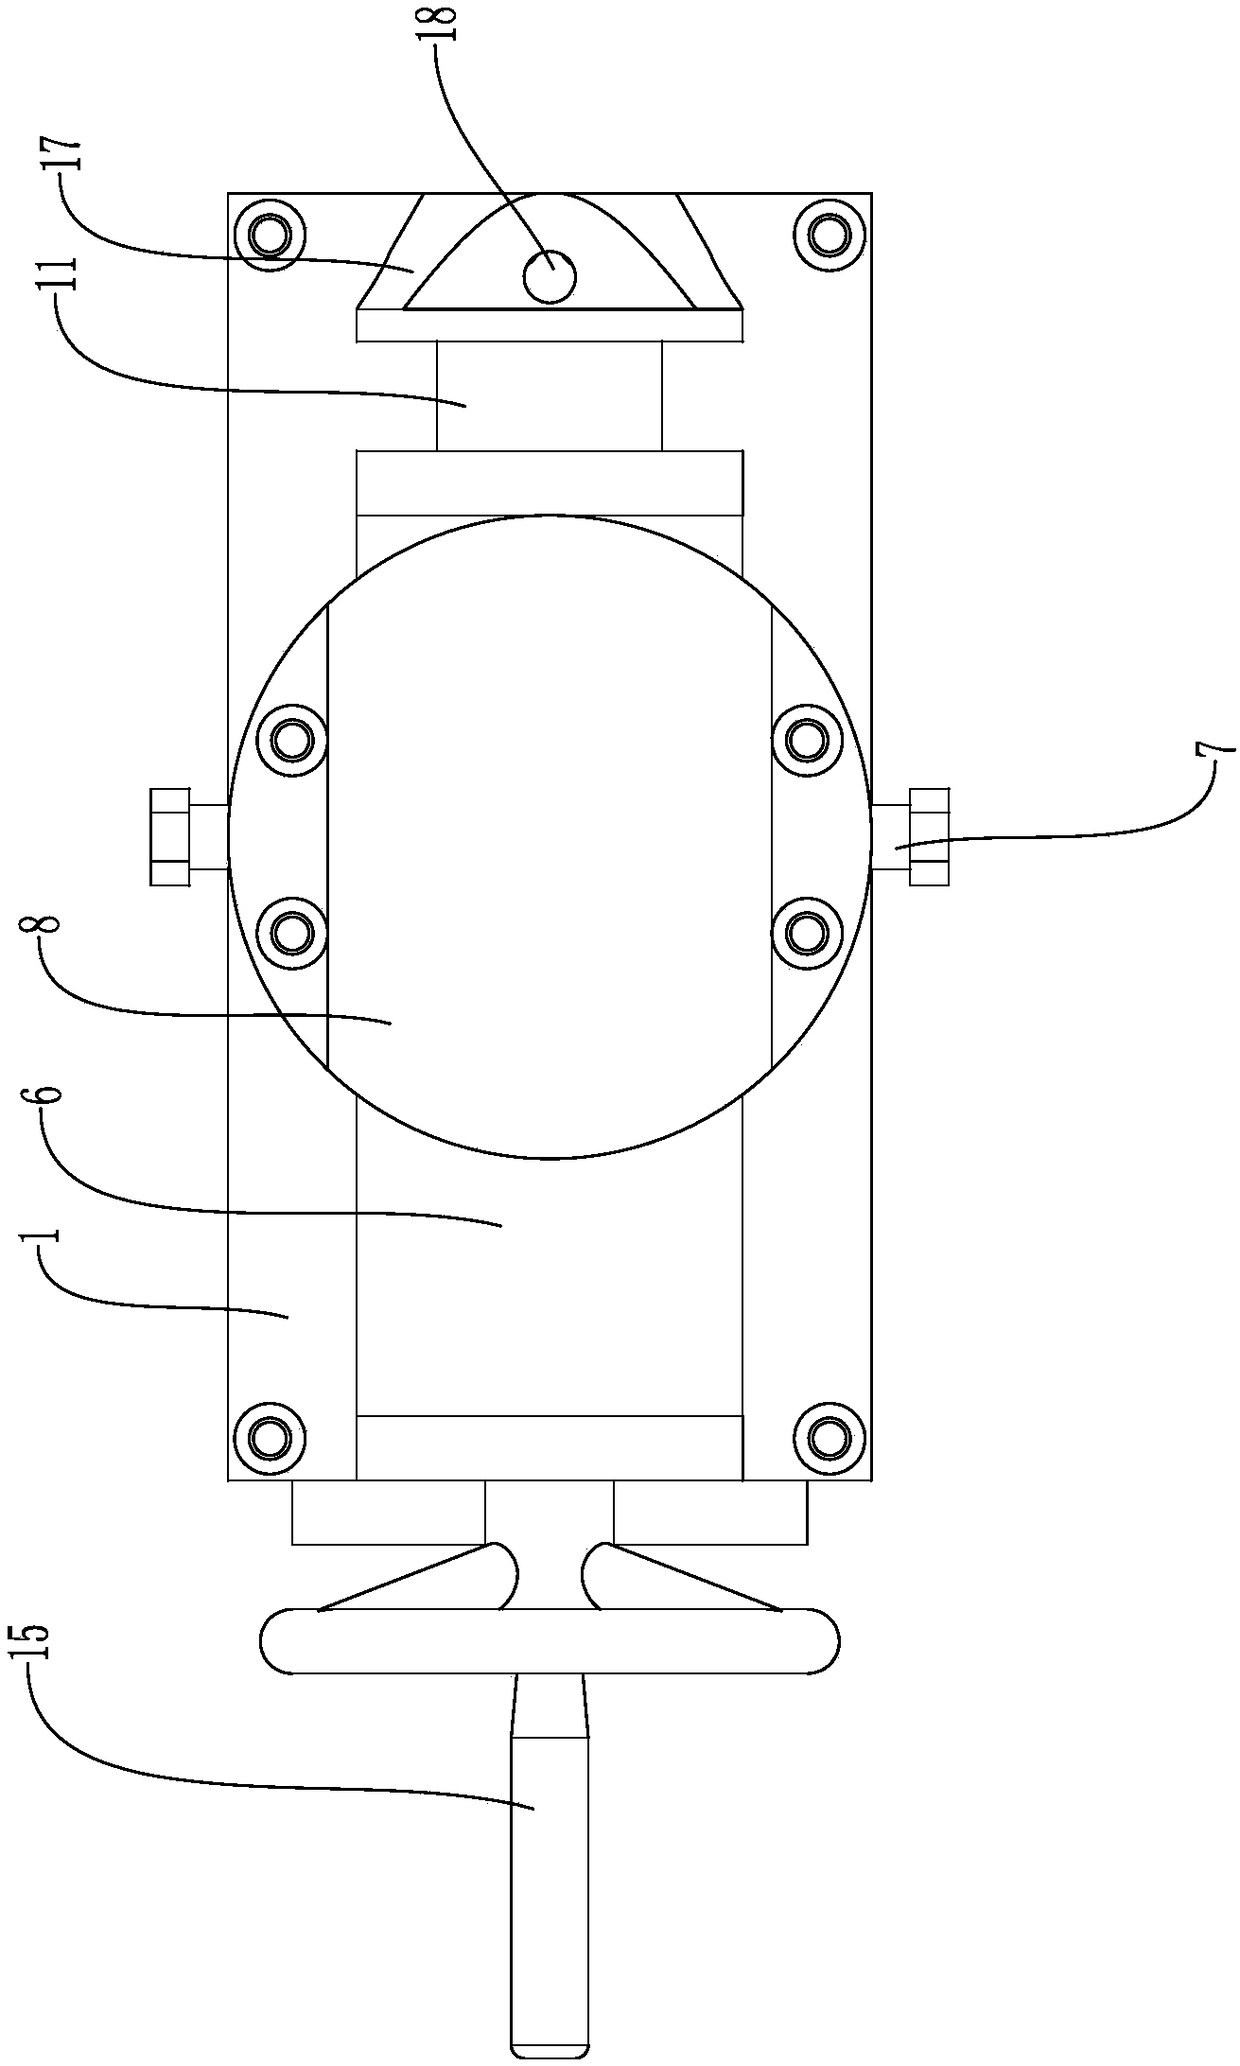 Cylindrical grinder all-purpose grinding wheel dresser